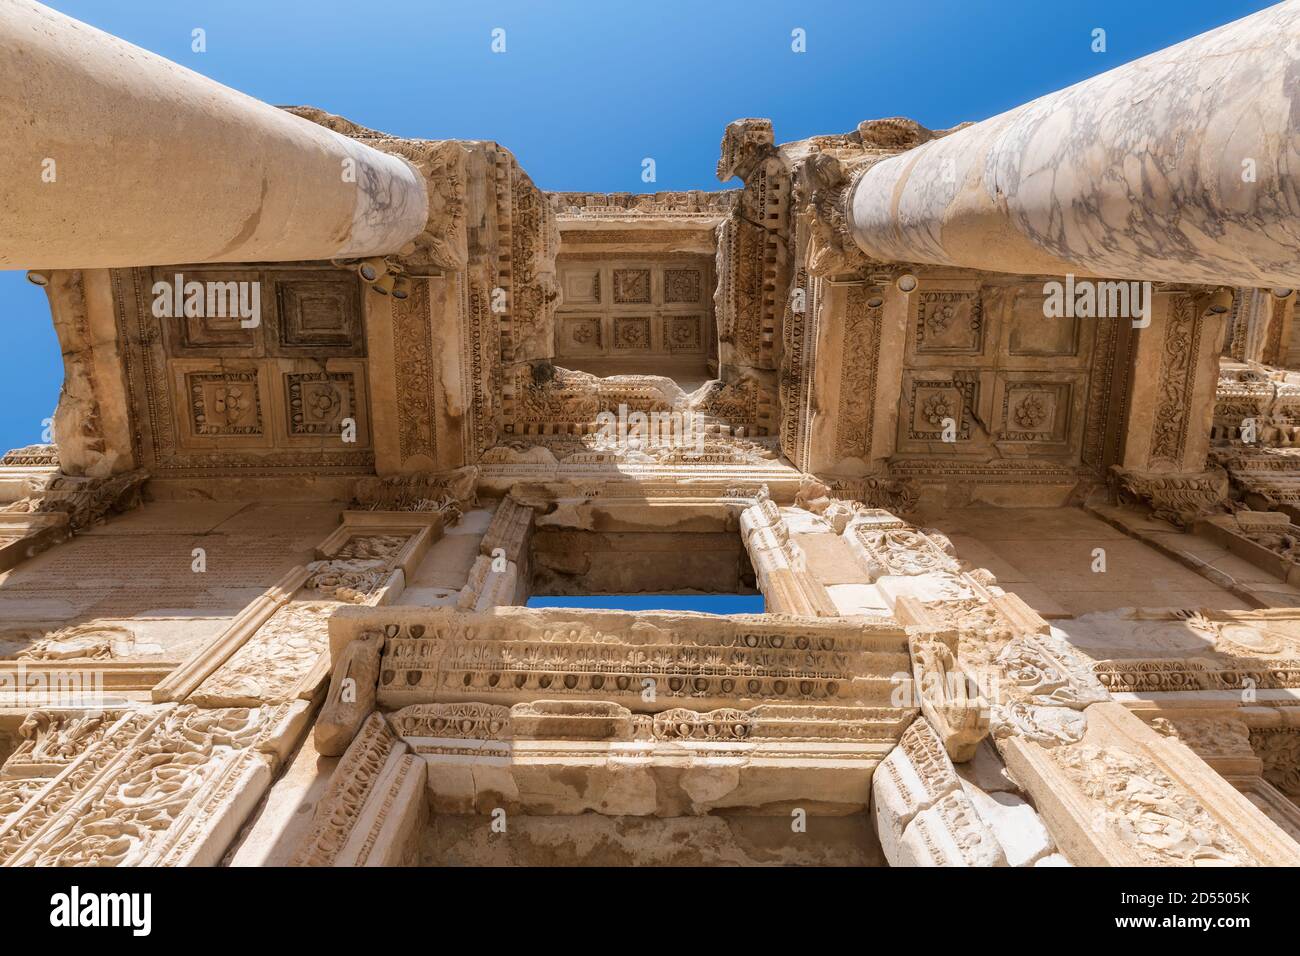 Celsius Library in ancient city Ephesus, Turkey. Stock Photo